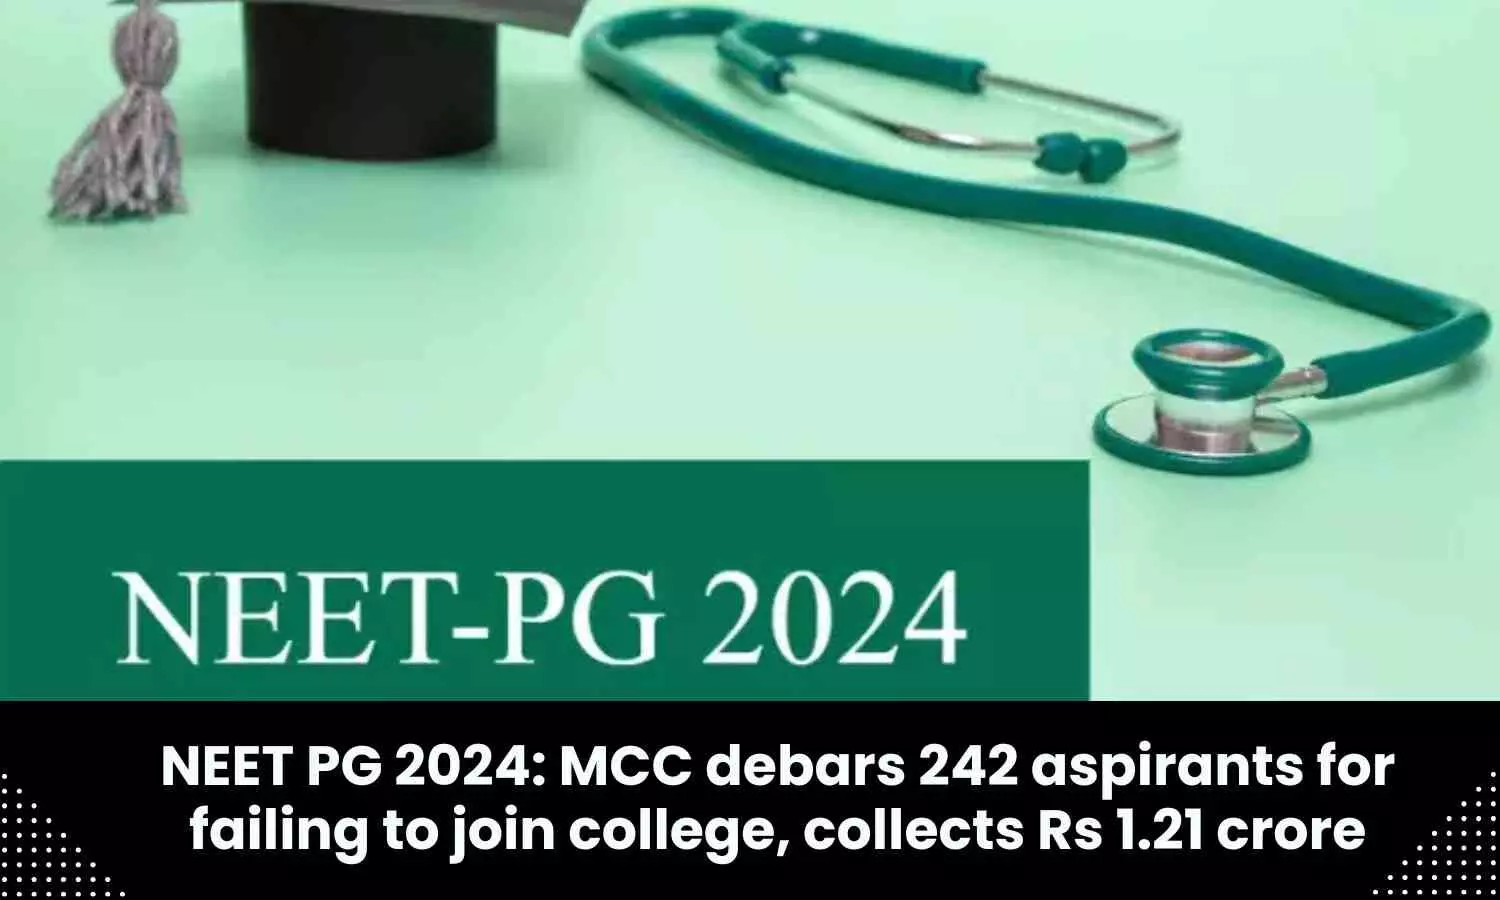 MCC says 242 doctors debarred from NEET PG 2024